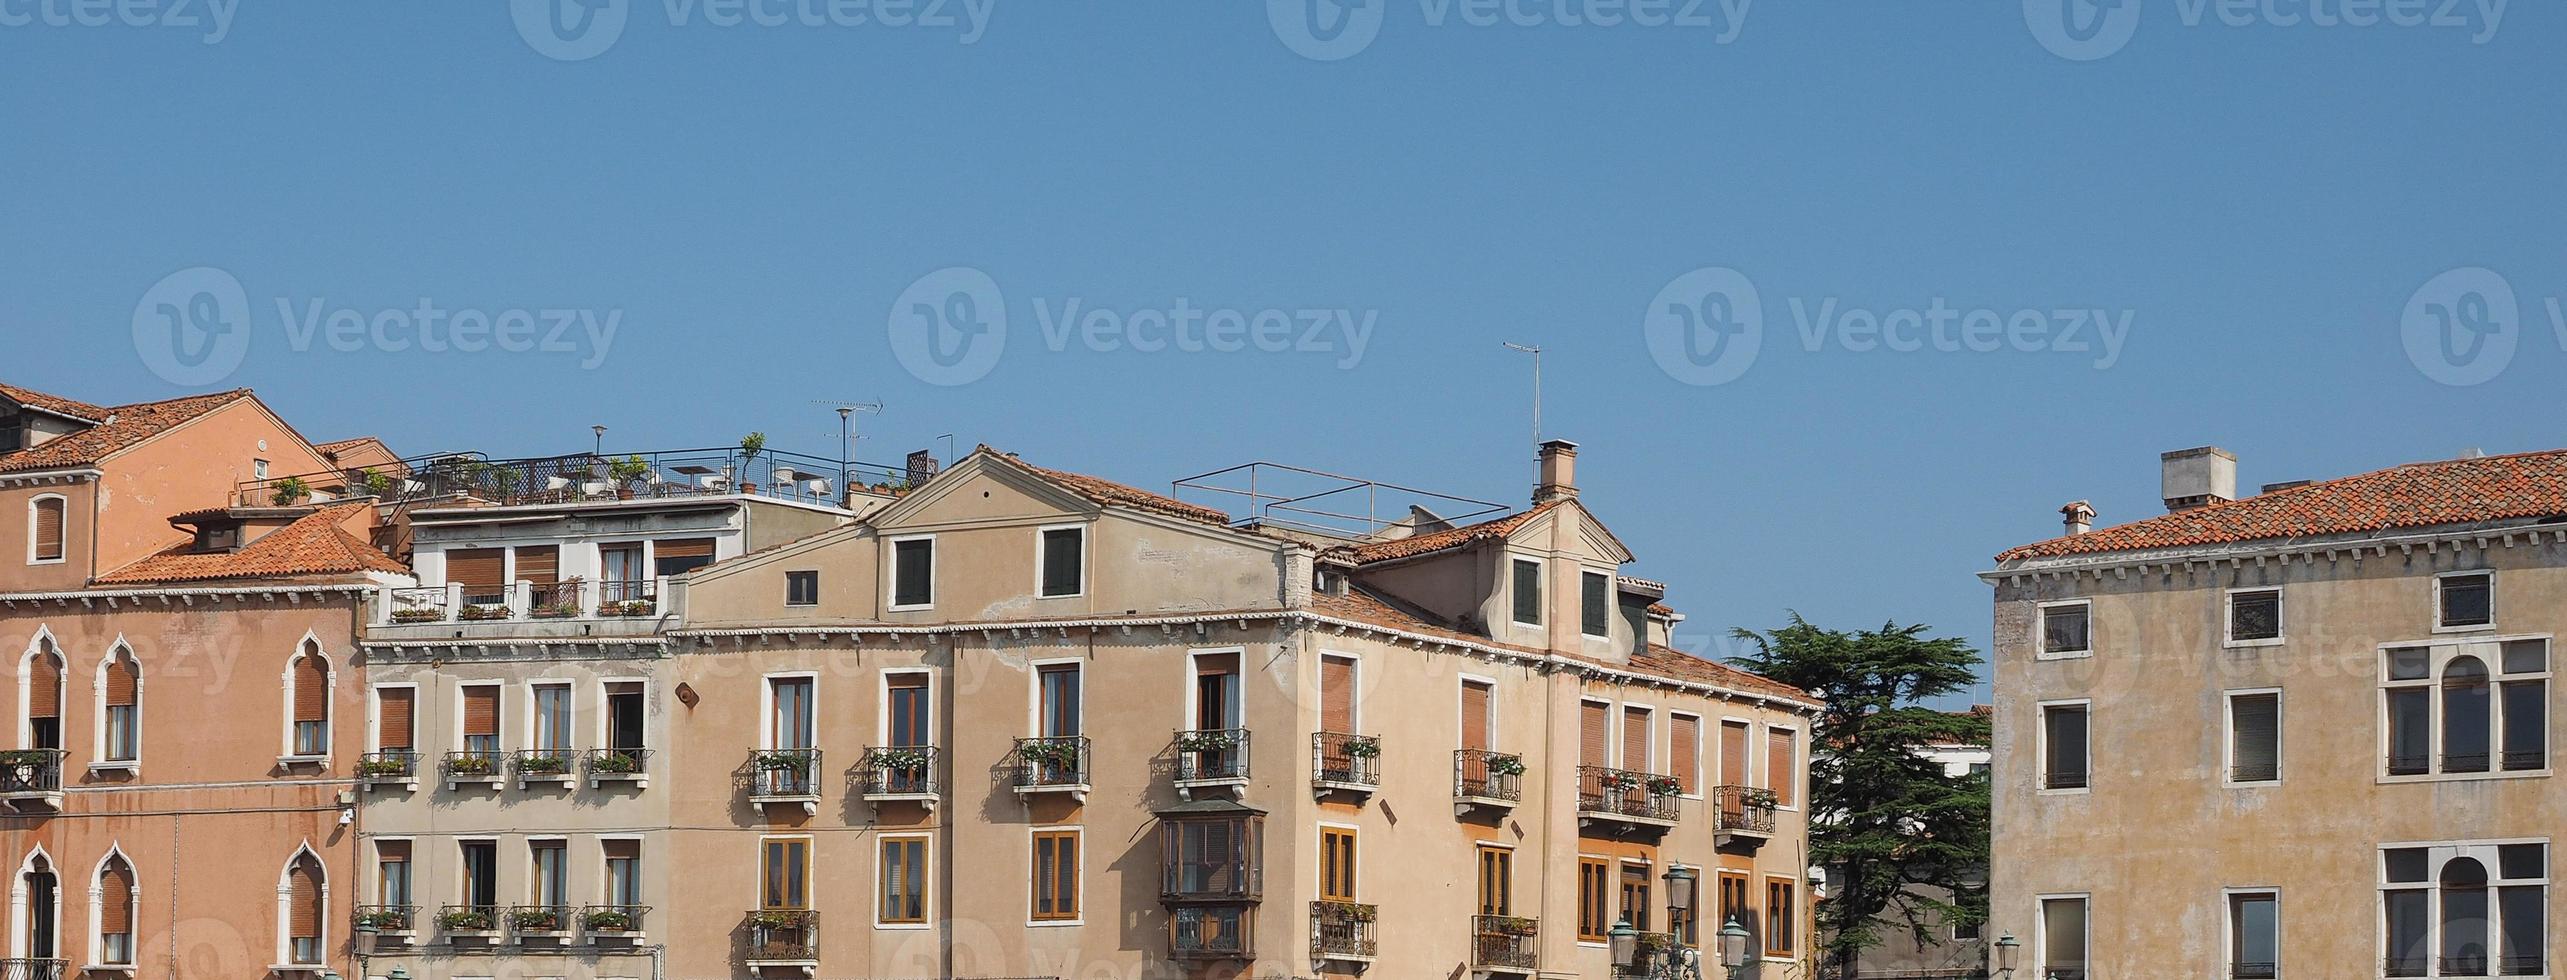 vista da cidade de veneza foto